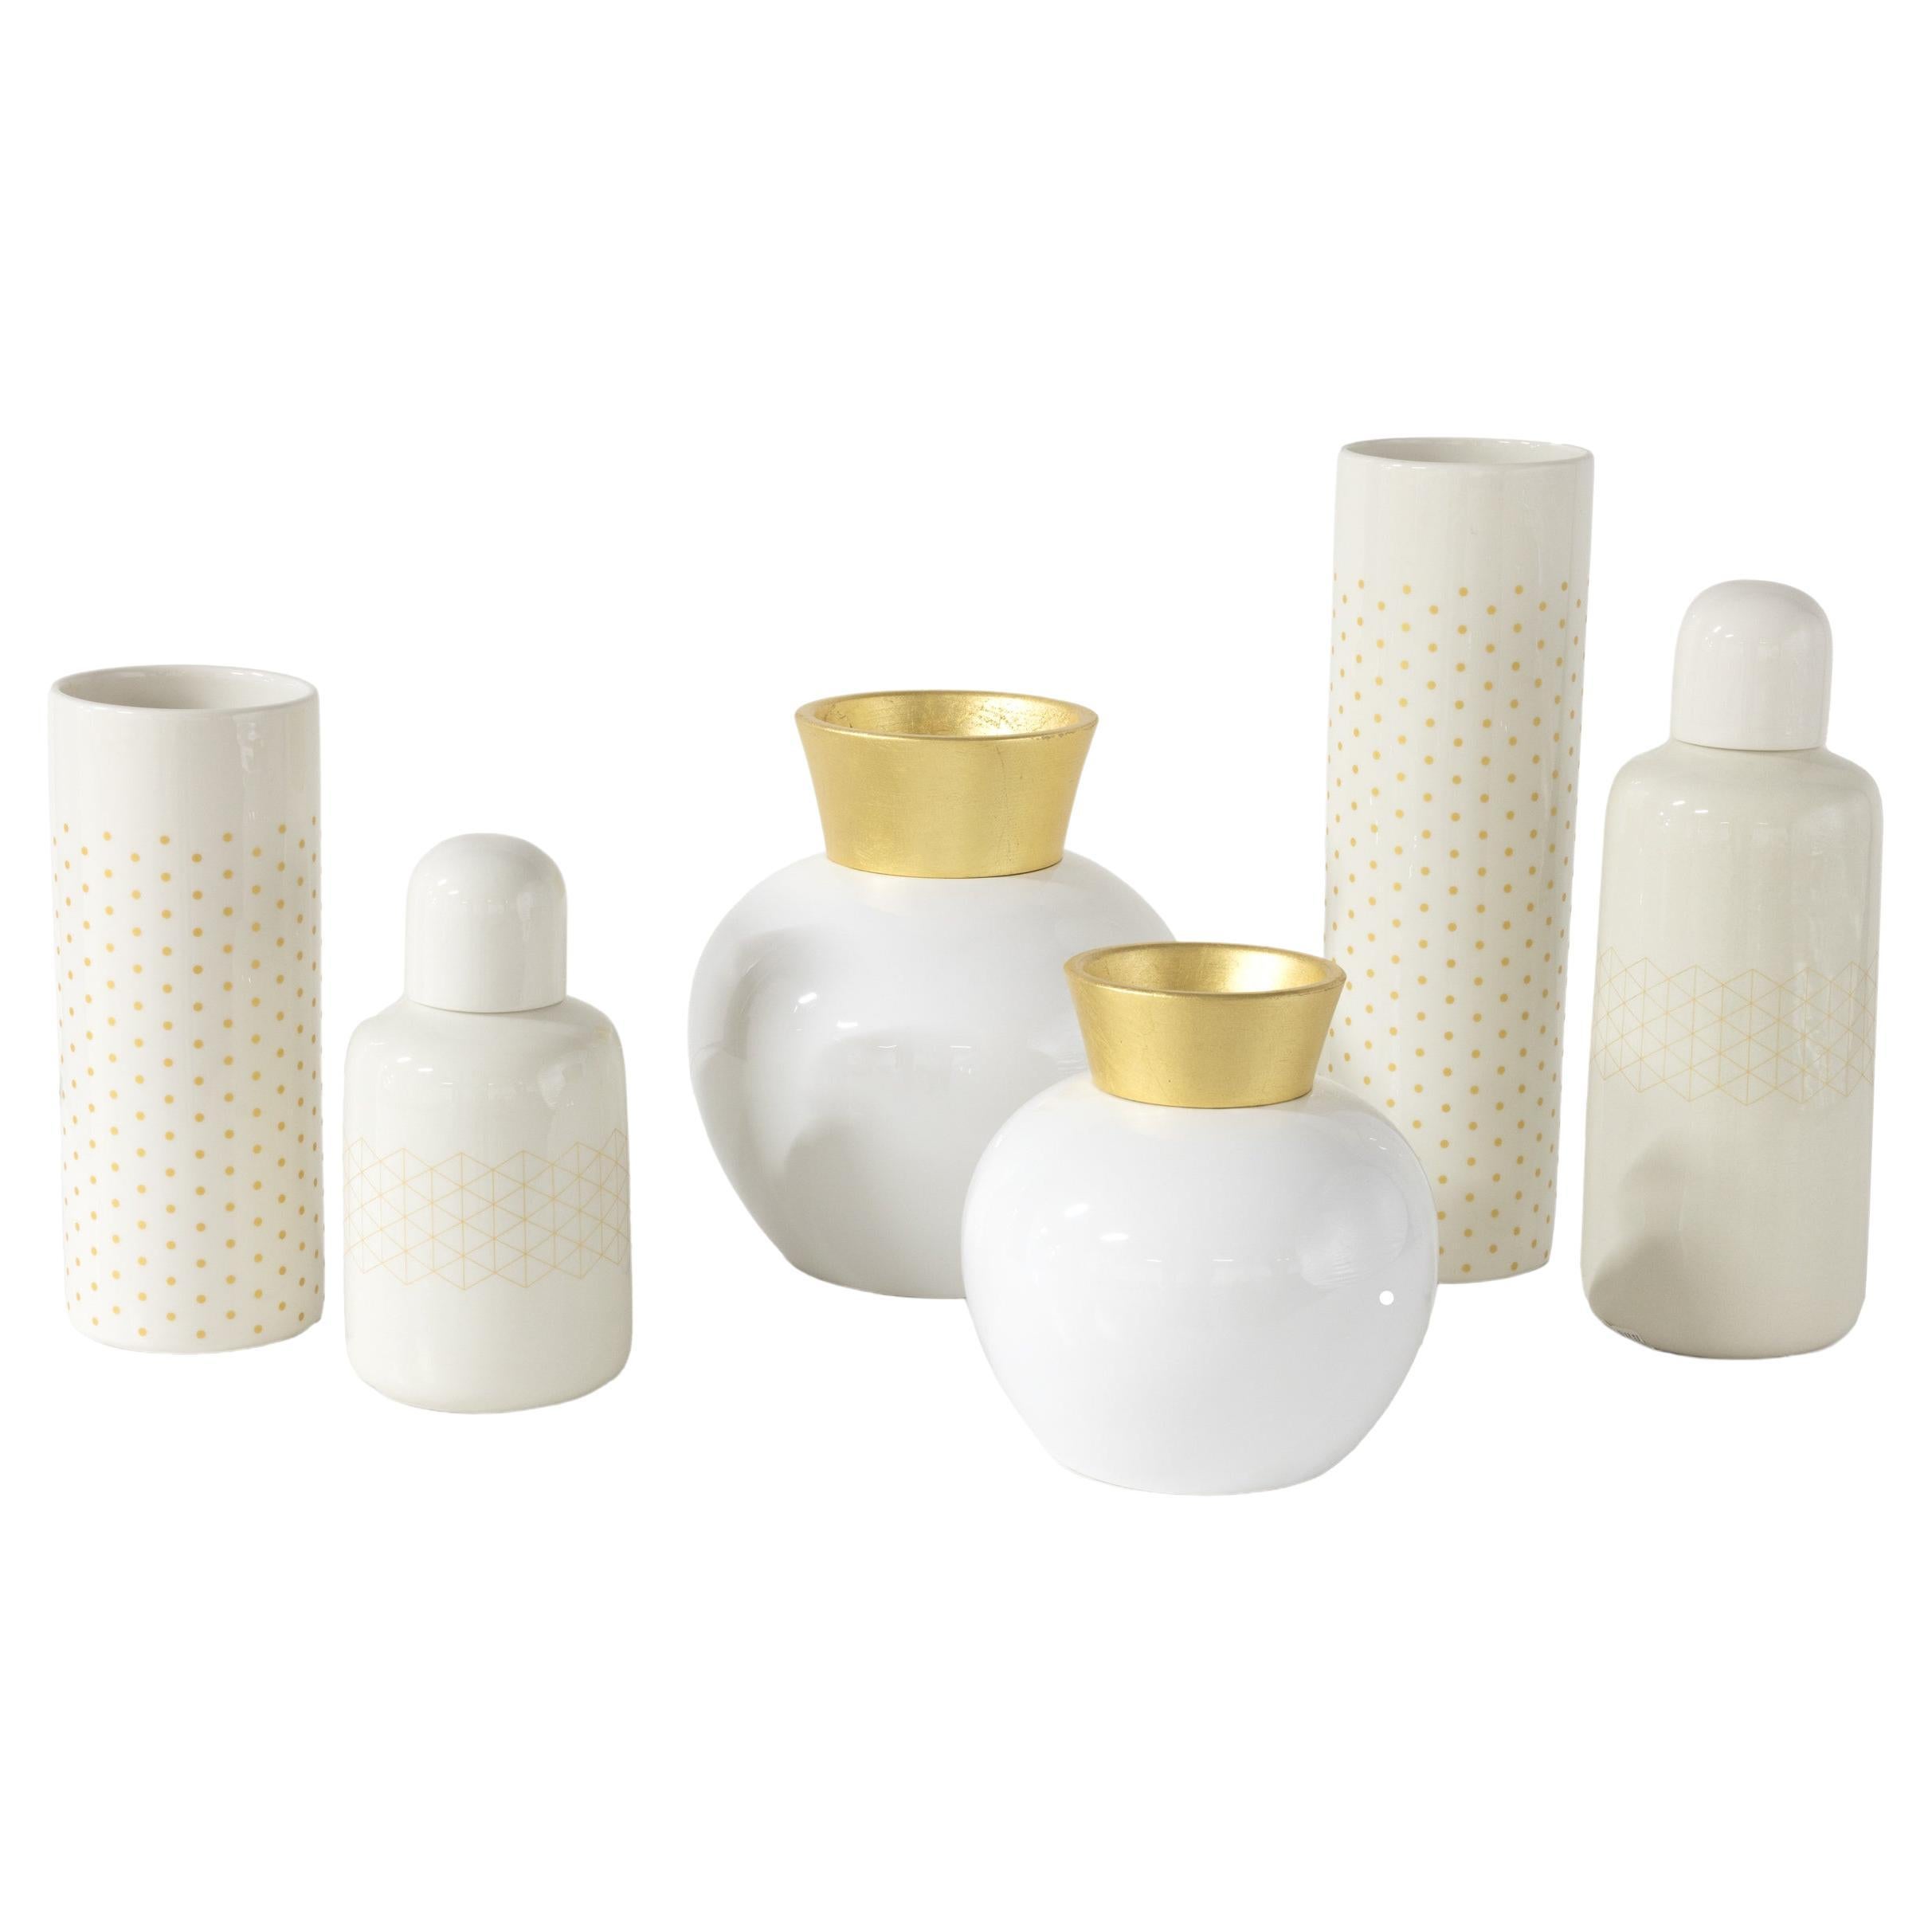 Set/6 Ceramic Pots & Vases, White, Handmade in Portugal by Lusitanus Home